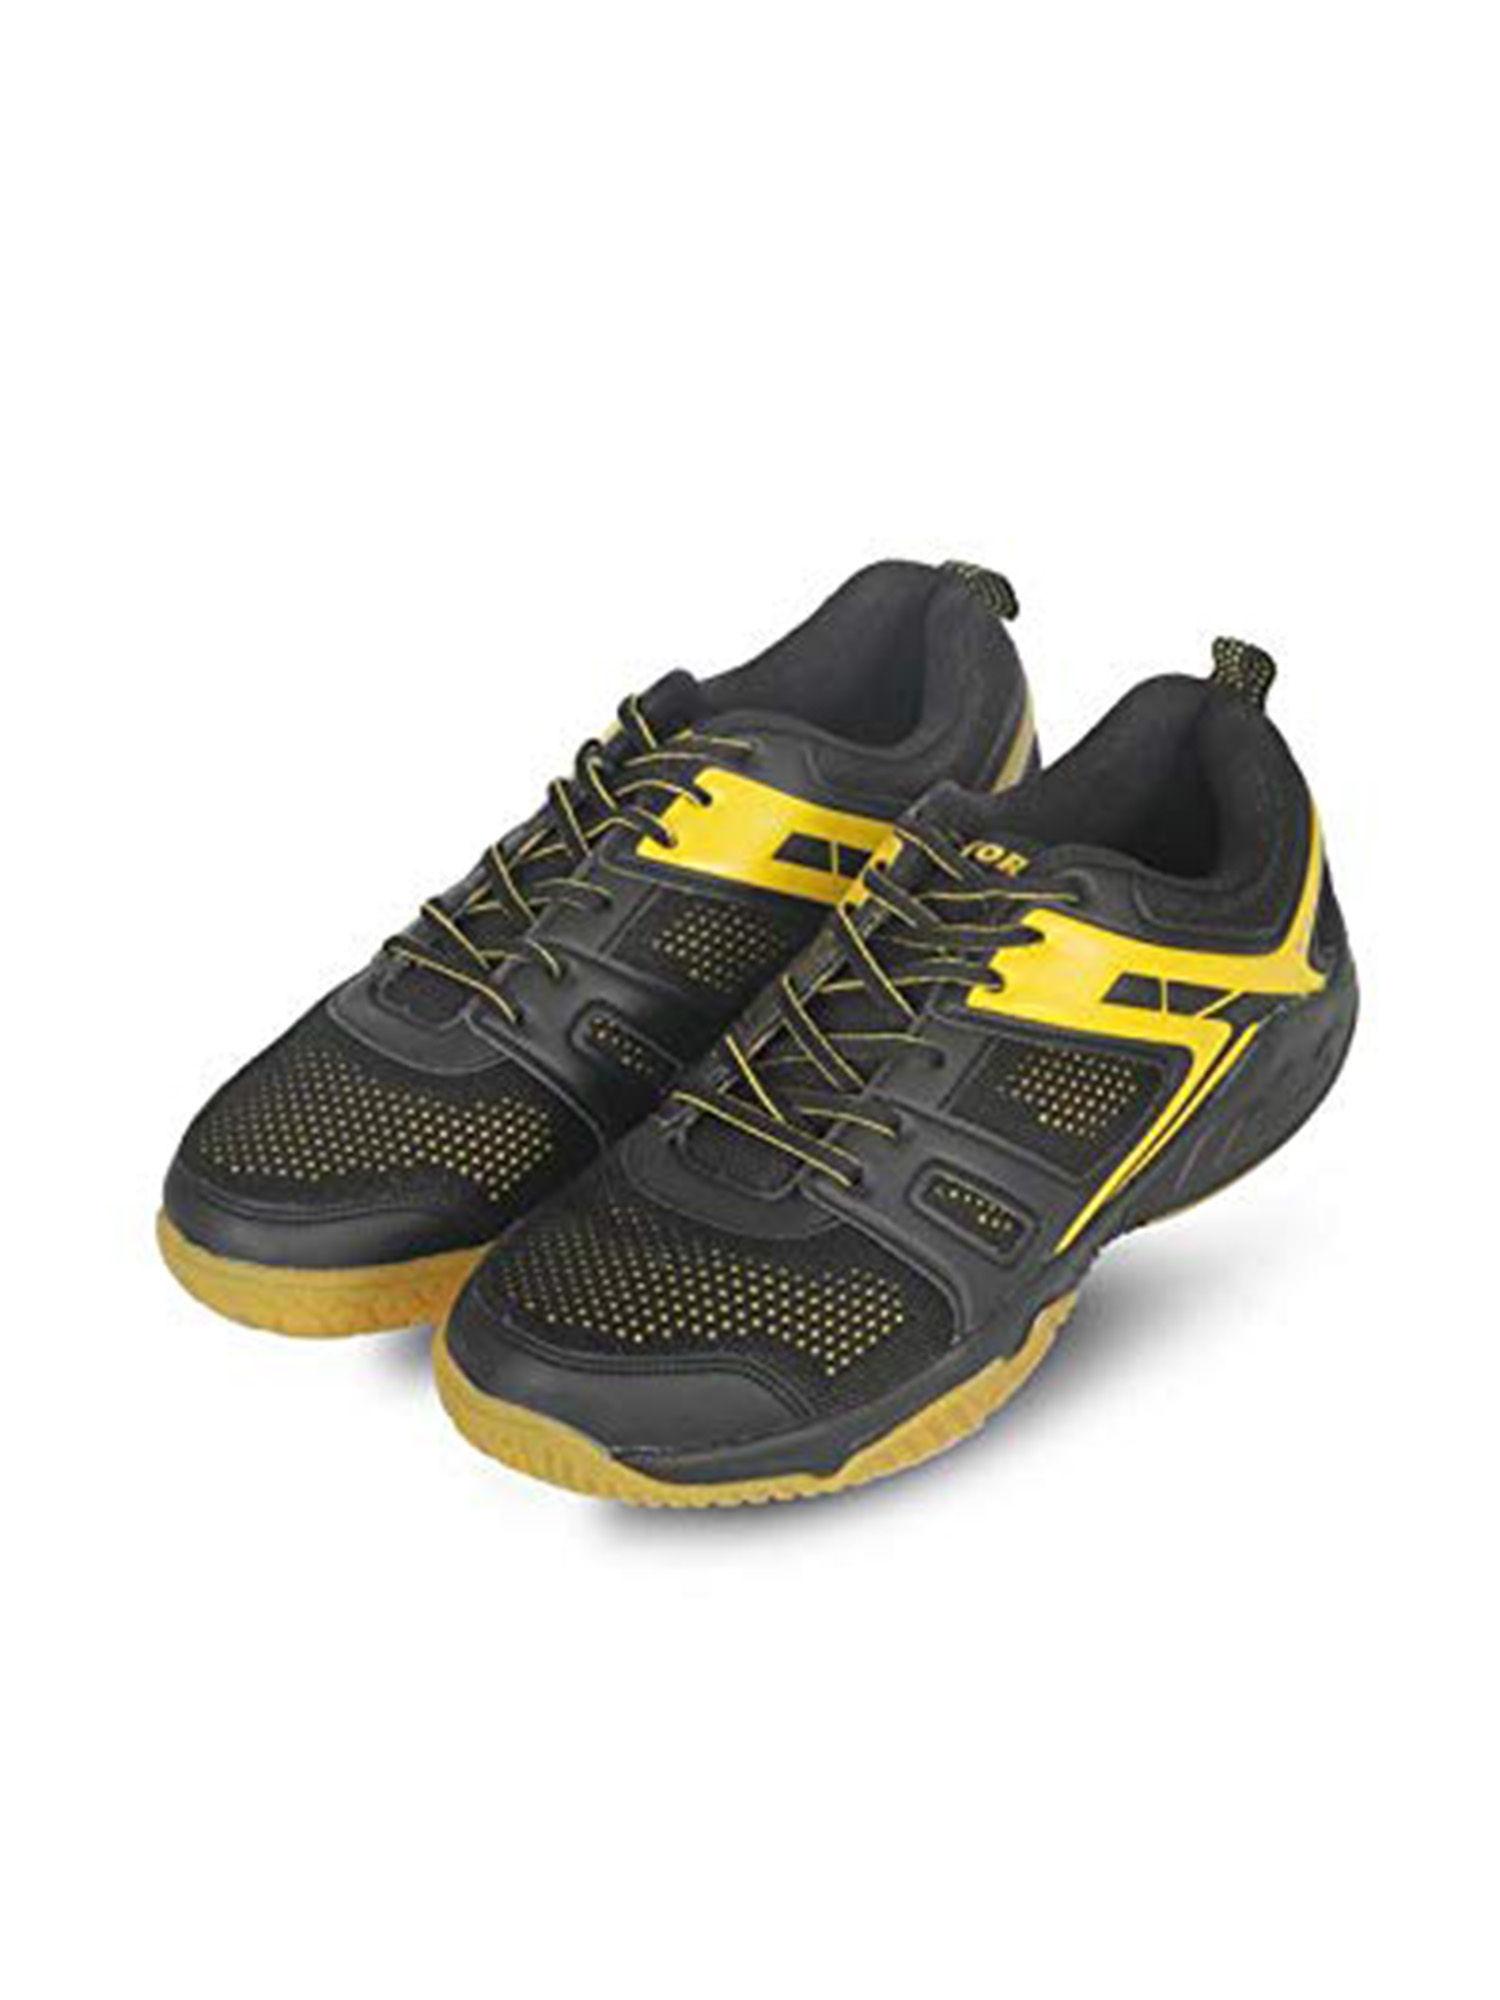 cs-2060-court-shoes-for-men-(black-yellow)